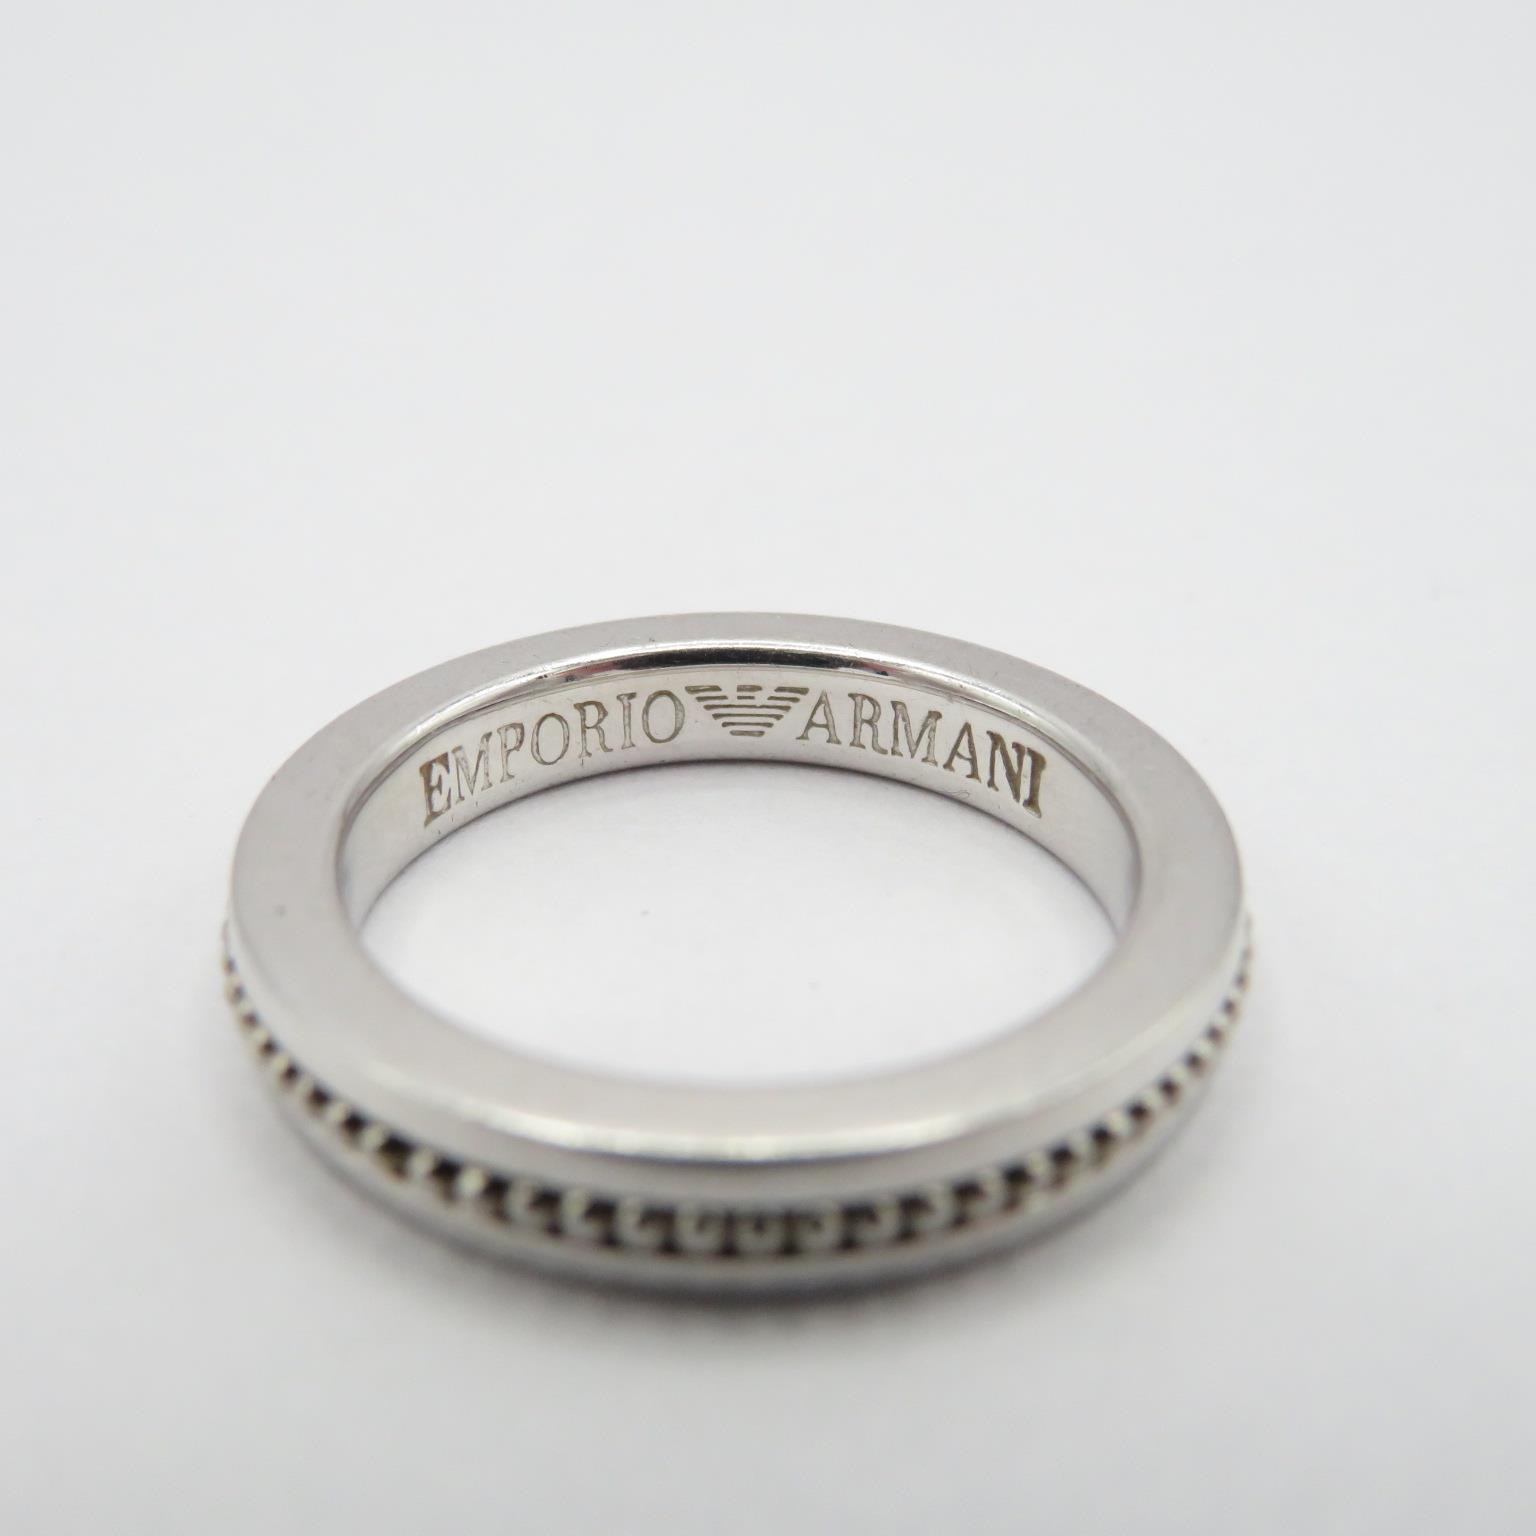 Three silver rings by designer Emporio Armani (15g) - Image 6 of 8